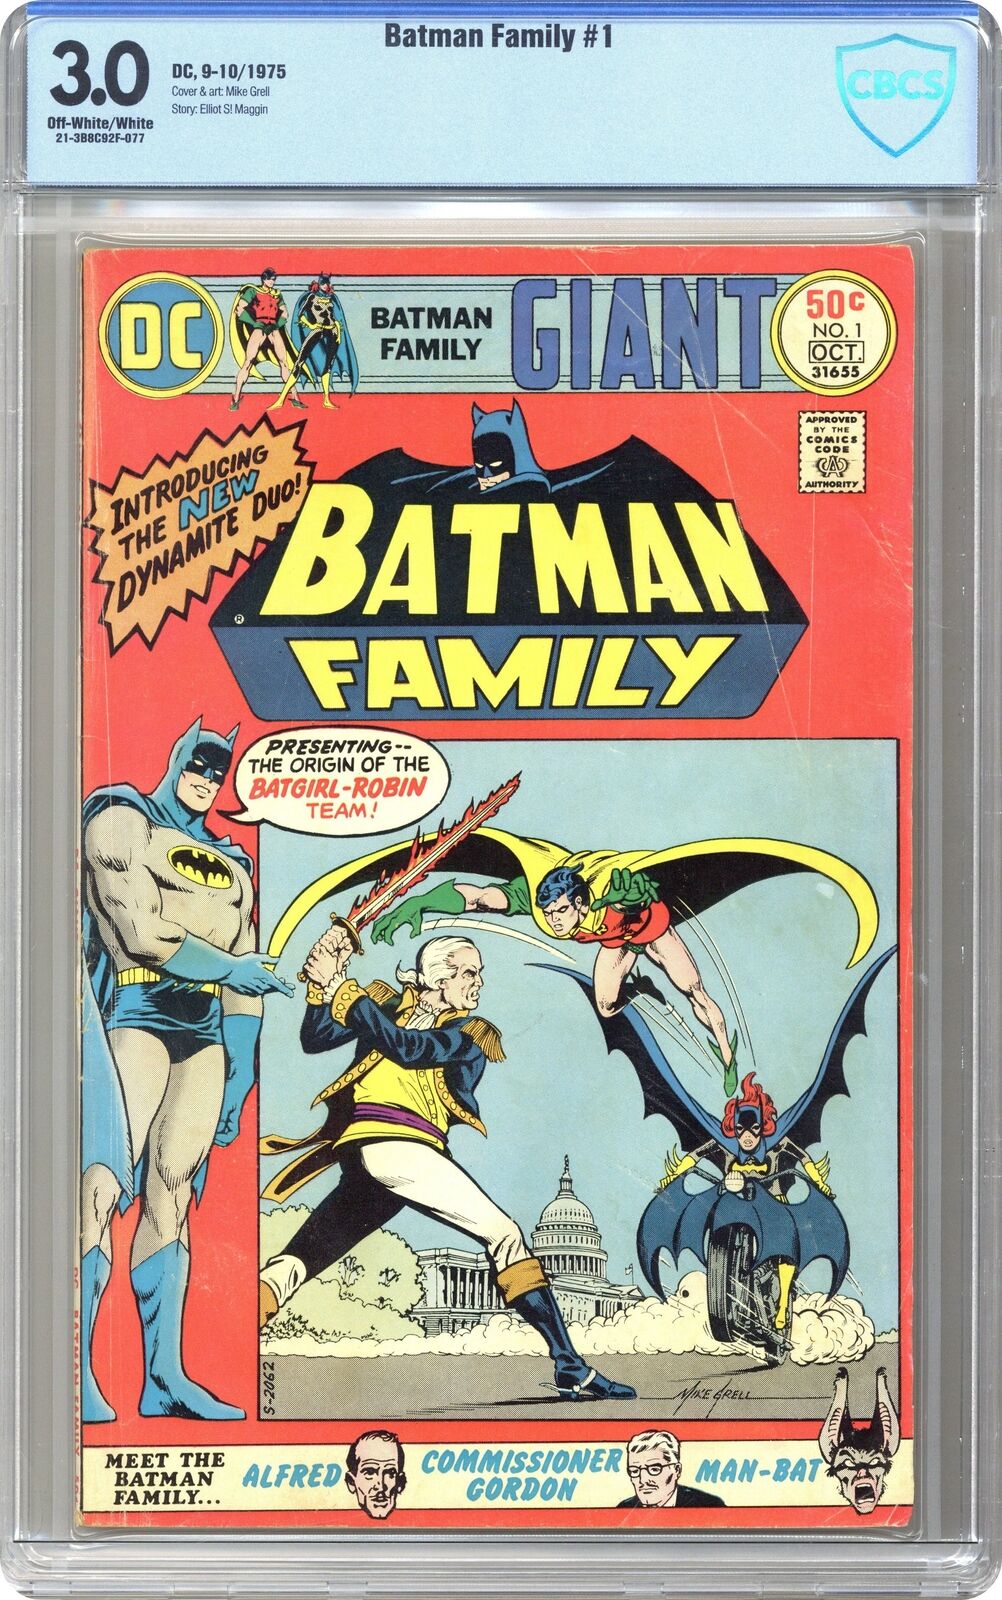 Batman Family #1 CBCS 3.0 1975 21-3B8C92F-077